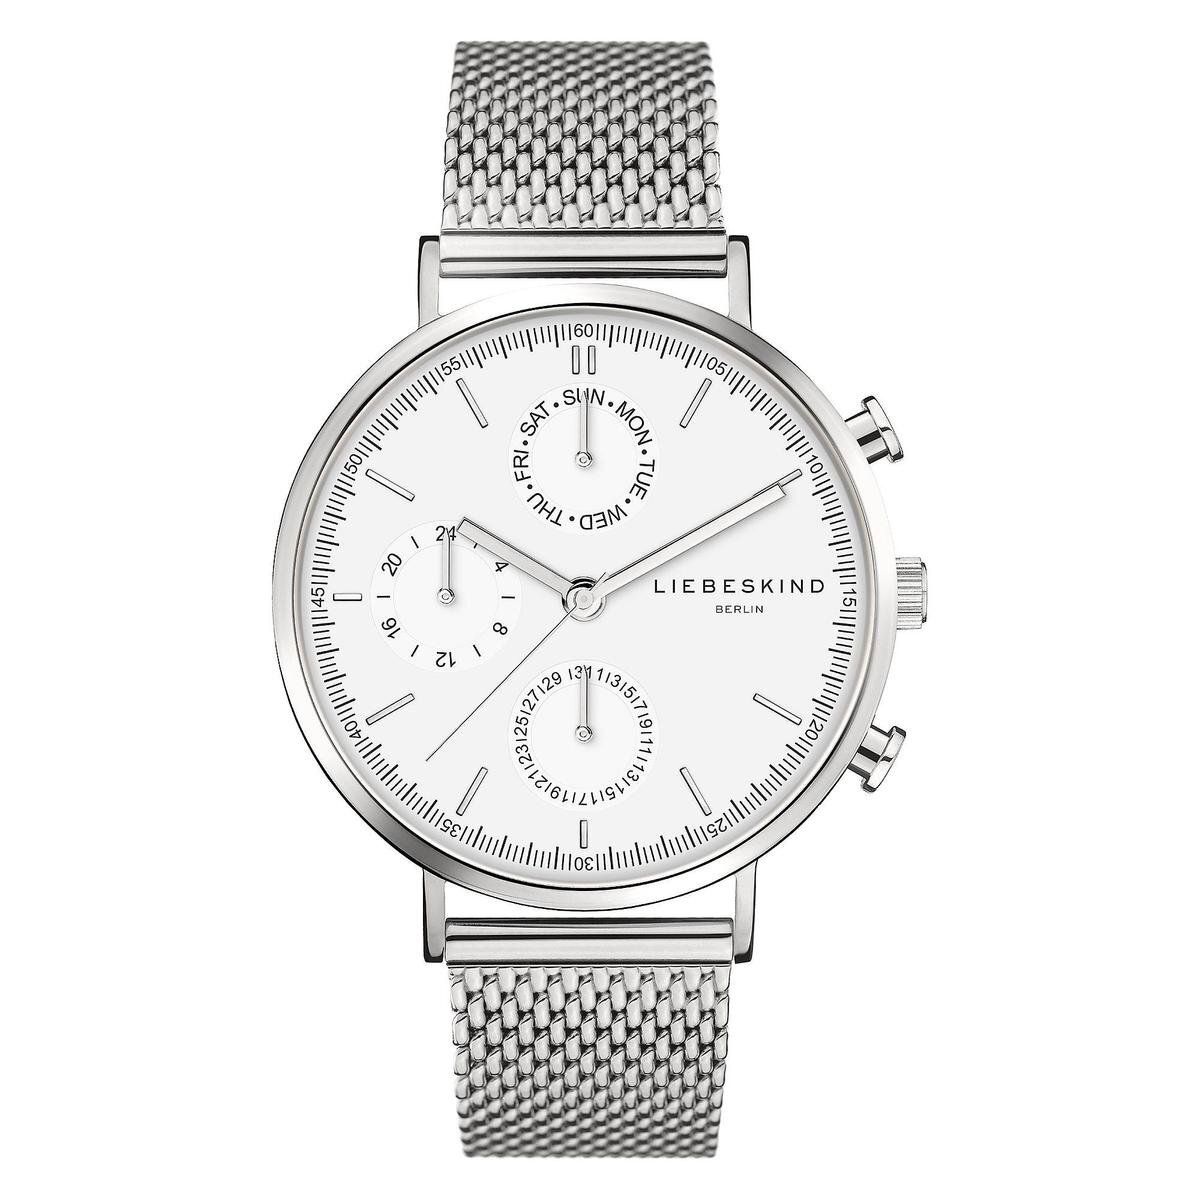 Liebeskind Berlin dames horloges quartz analoog One Size Zilver 32010532